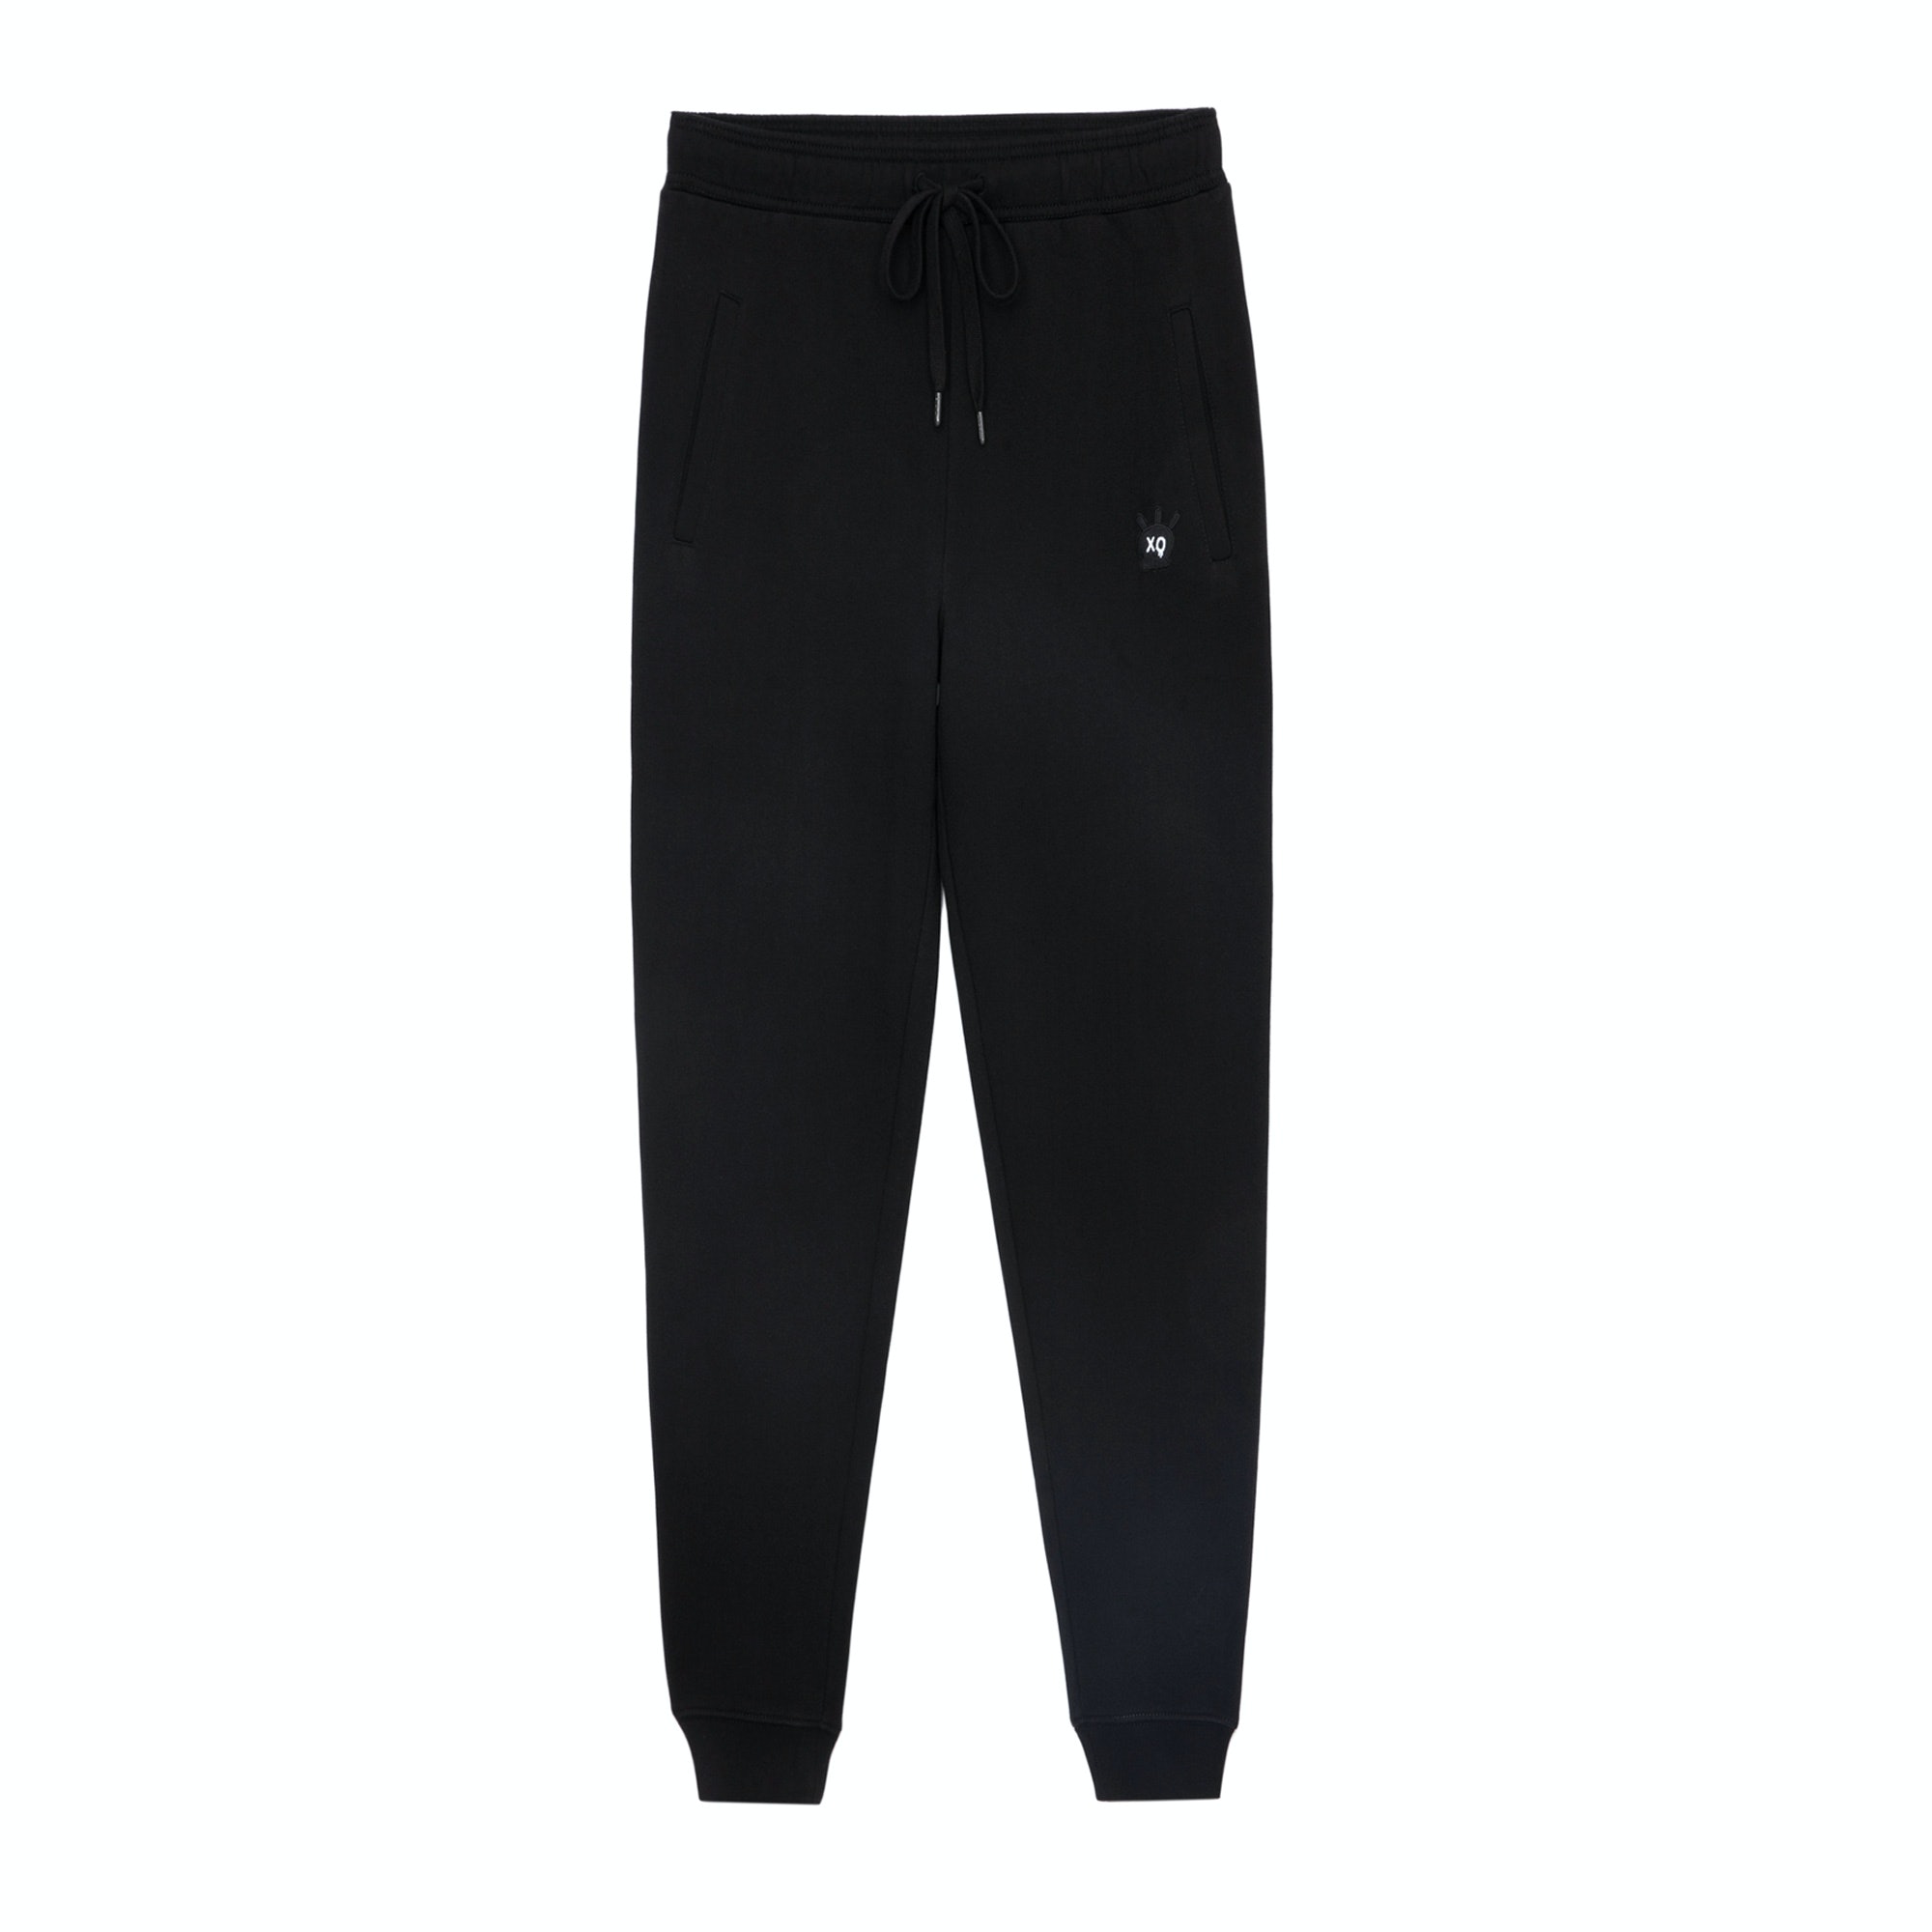 Pantalon De Jogging Capri Skull Noir - Taille S - Homme